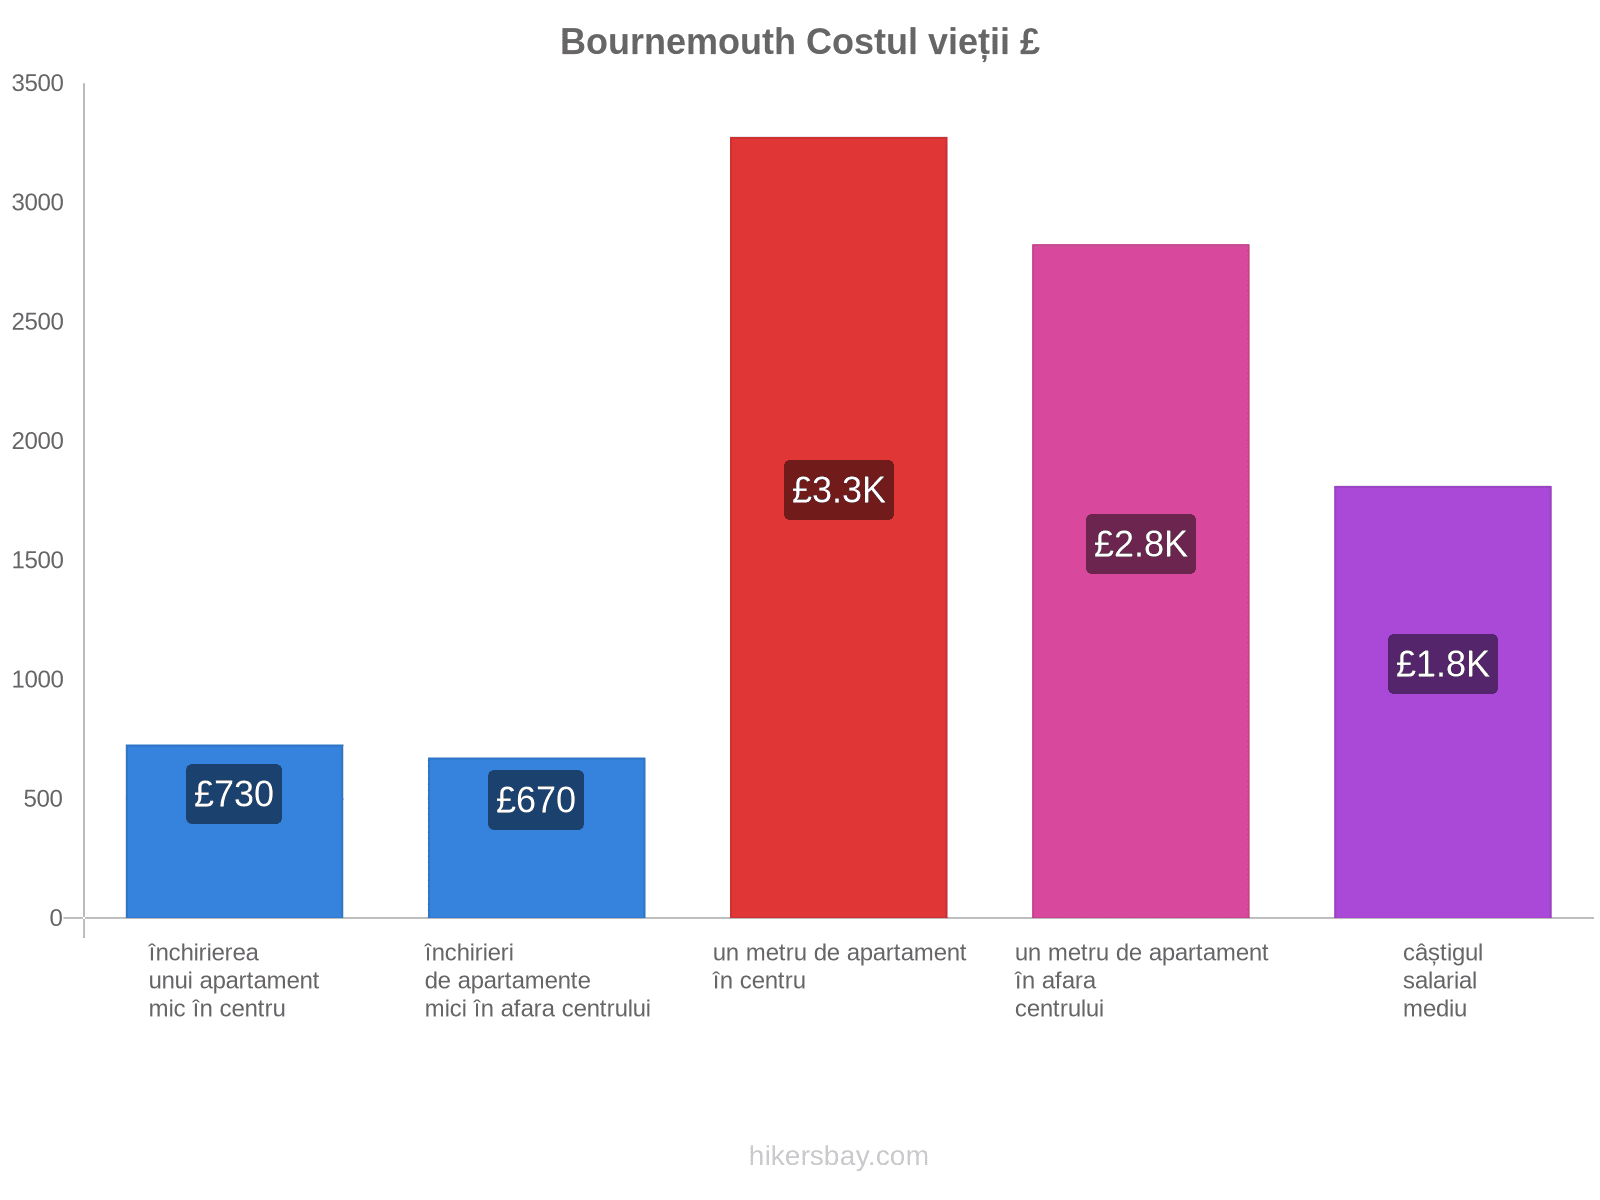 Bournemouth costul vieții hikersbay.com